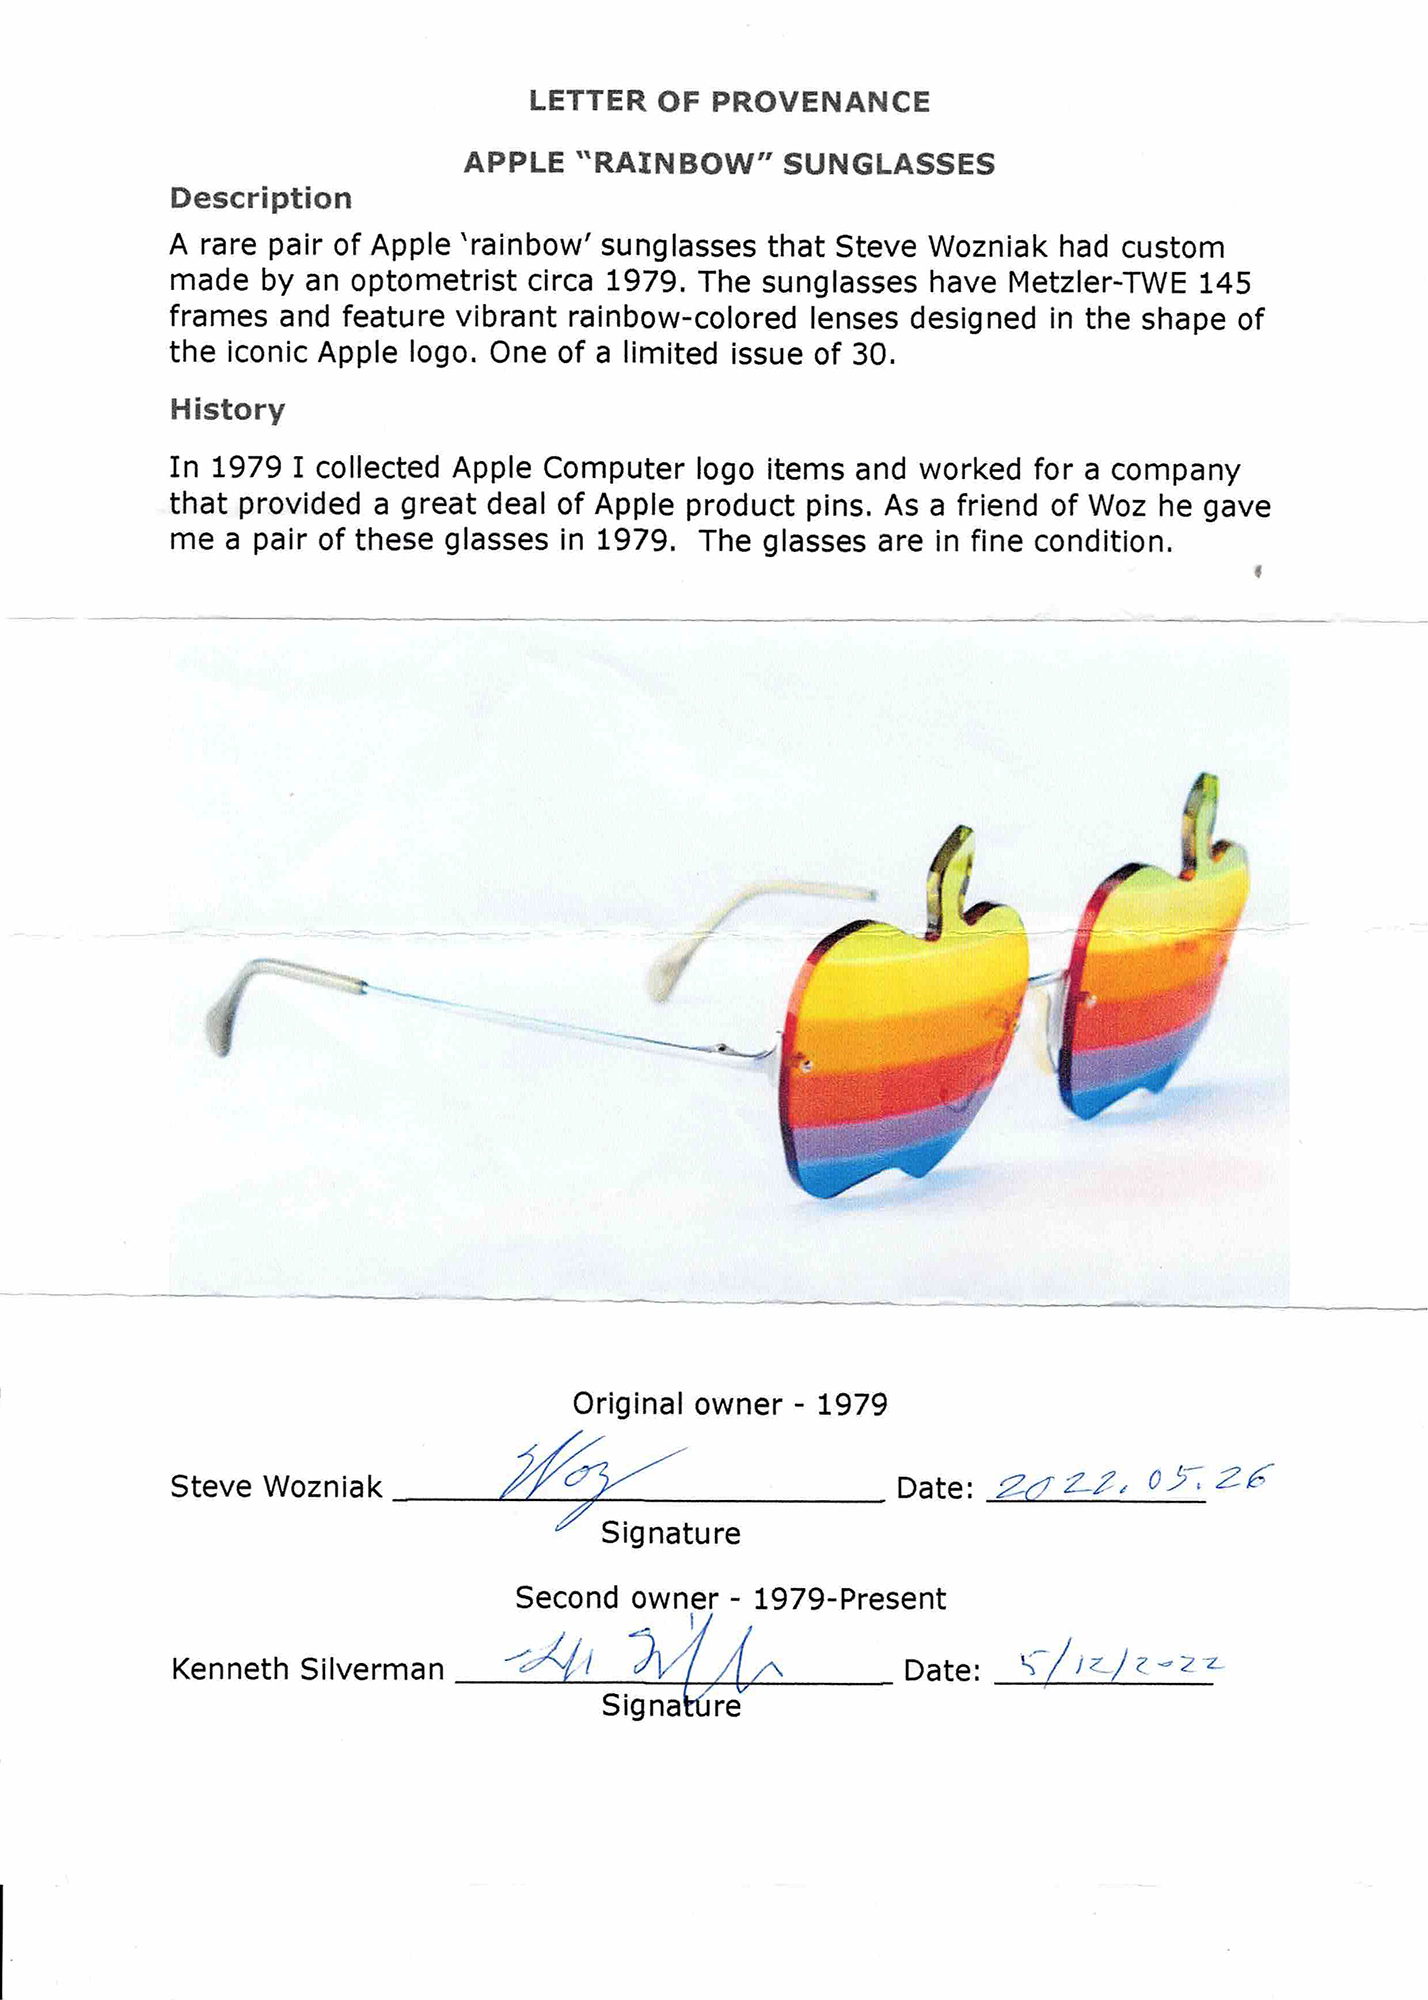 Lot #5074 Steve Wozniak's Apple Rainbow Glasses - Image 2